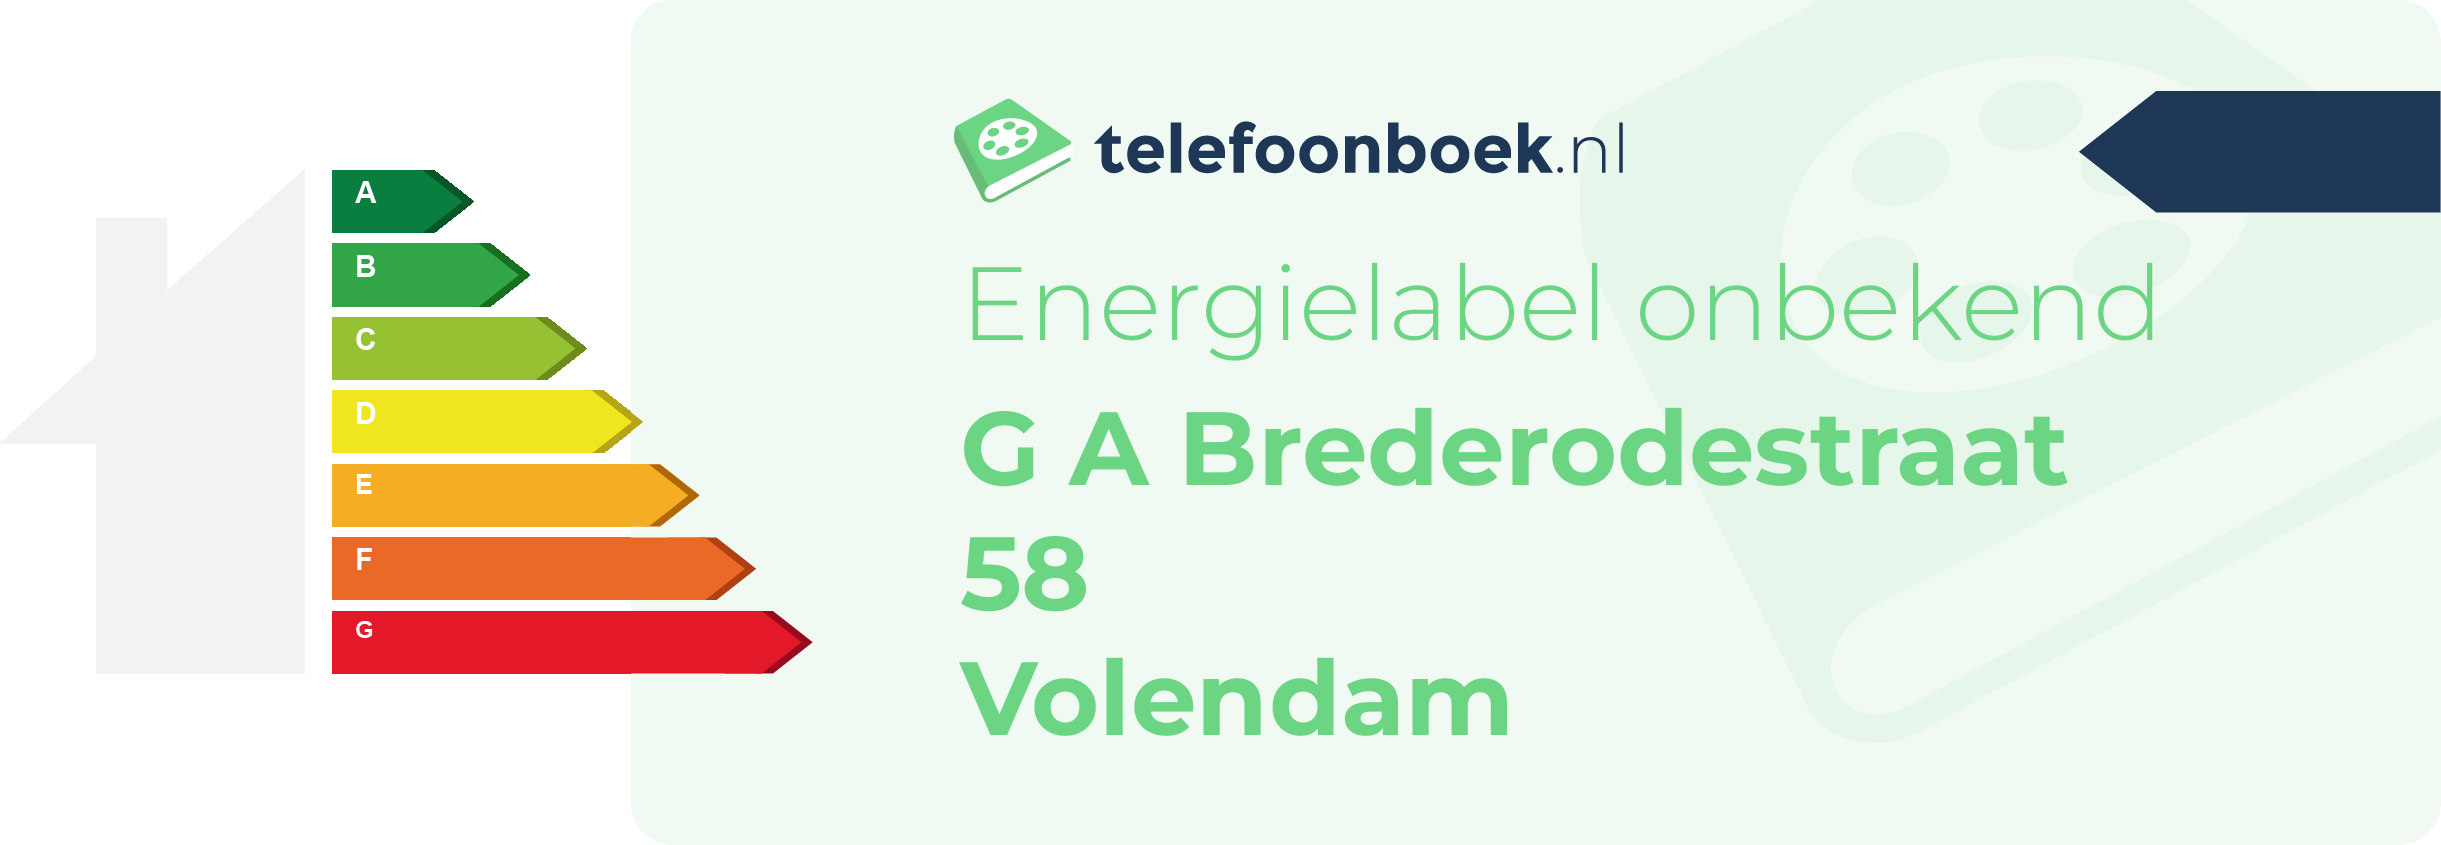 Energielabel G A Brederodestraat 58 Volendam